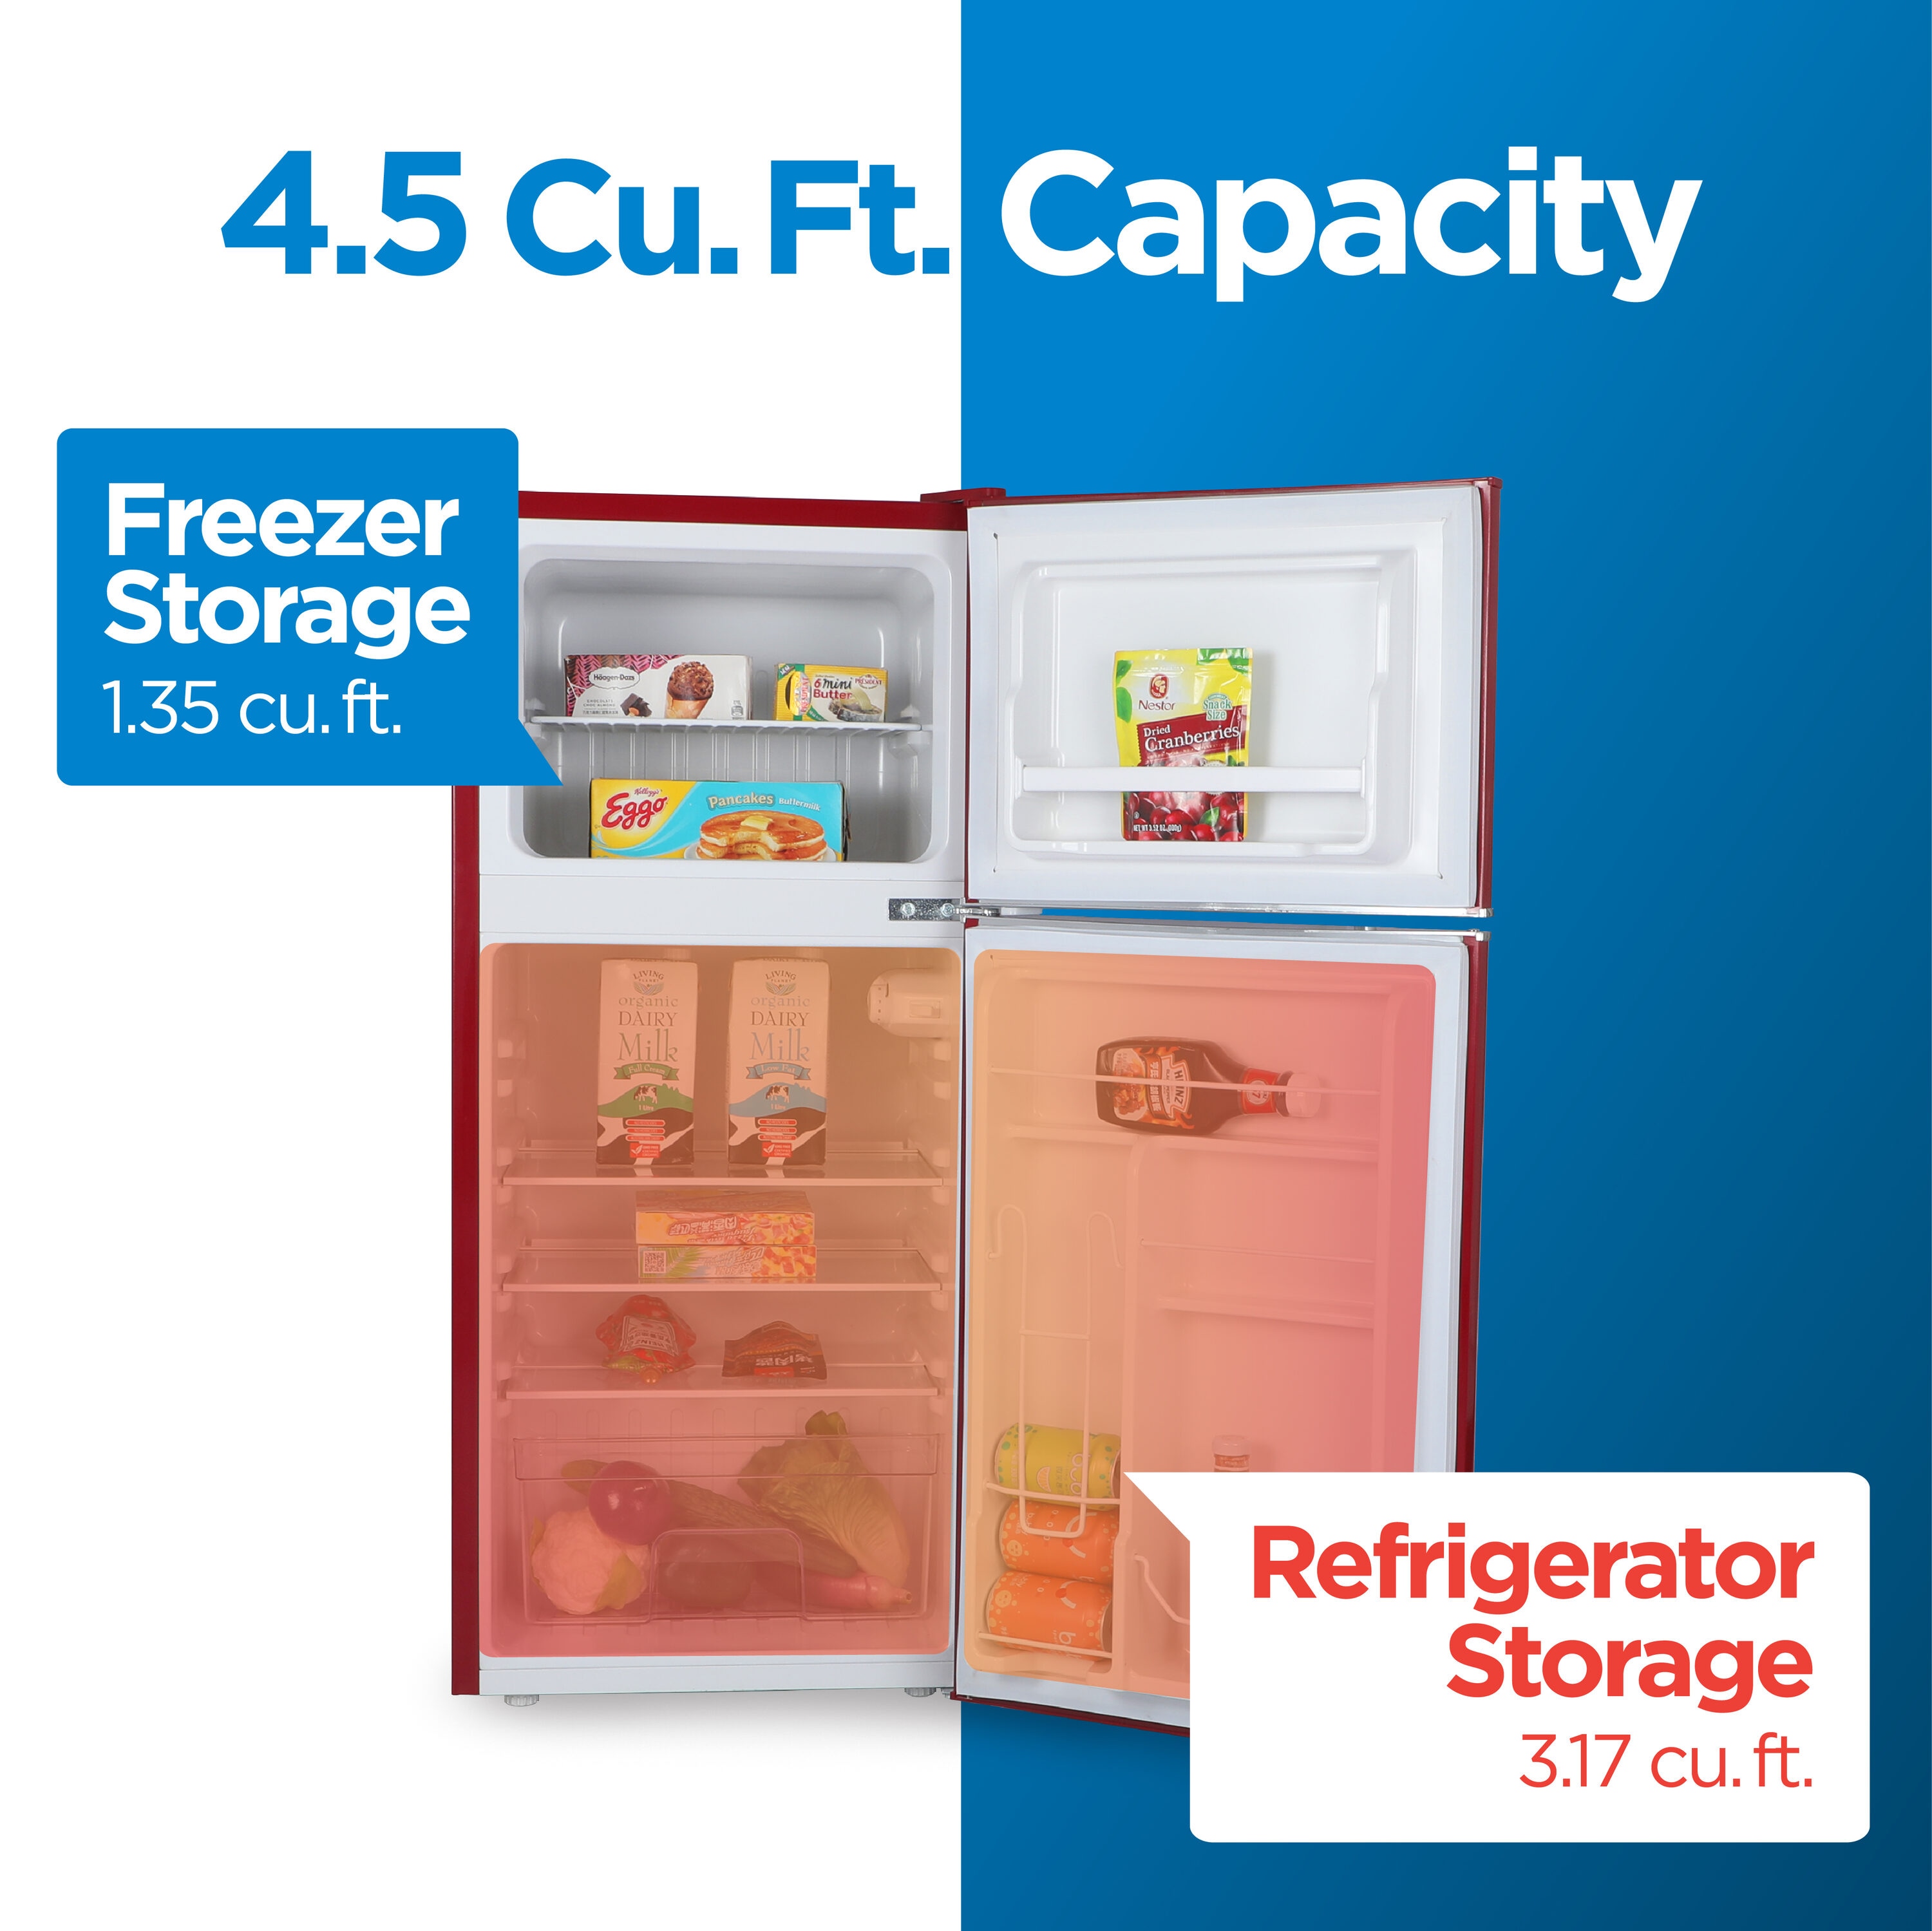 Red Refrigerator - Best Buy